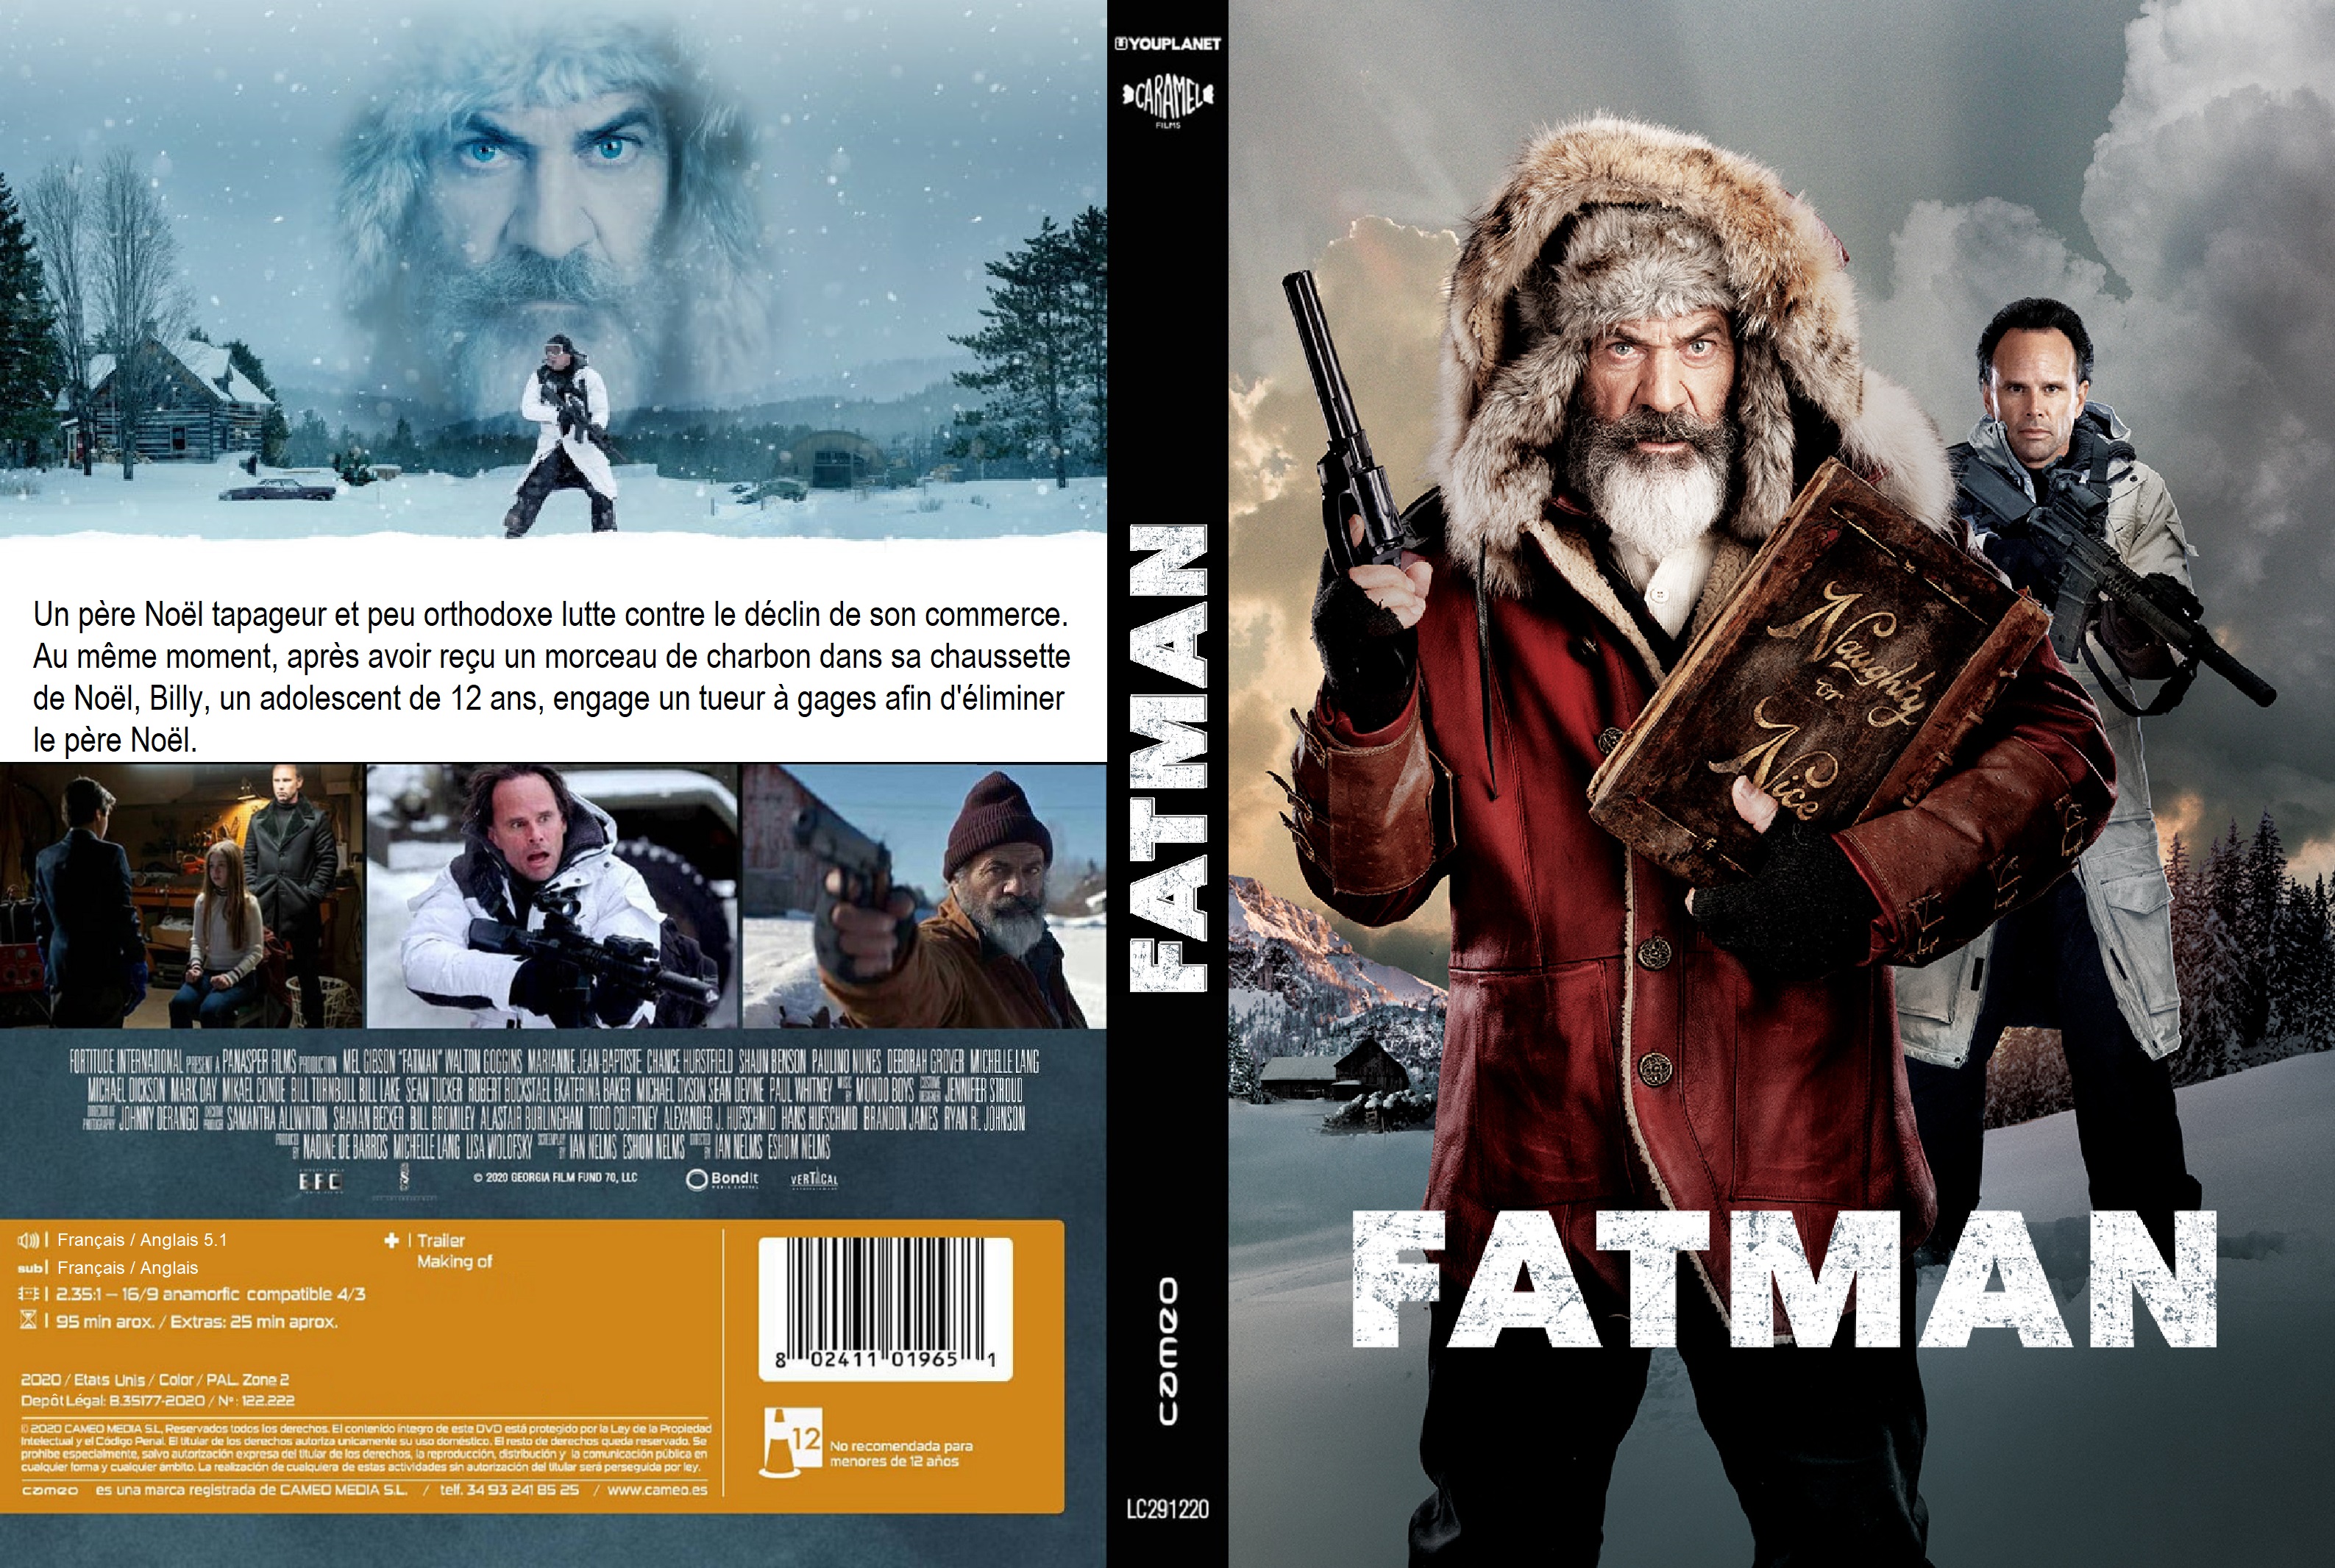 Jaquette DVD Fatman custom v2